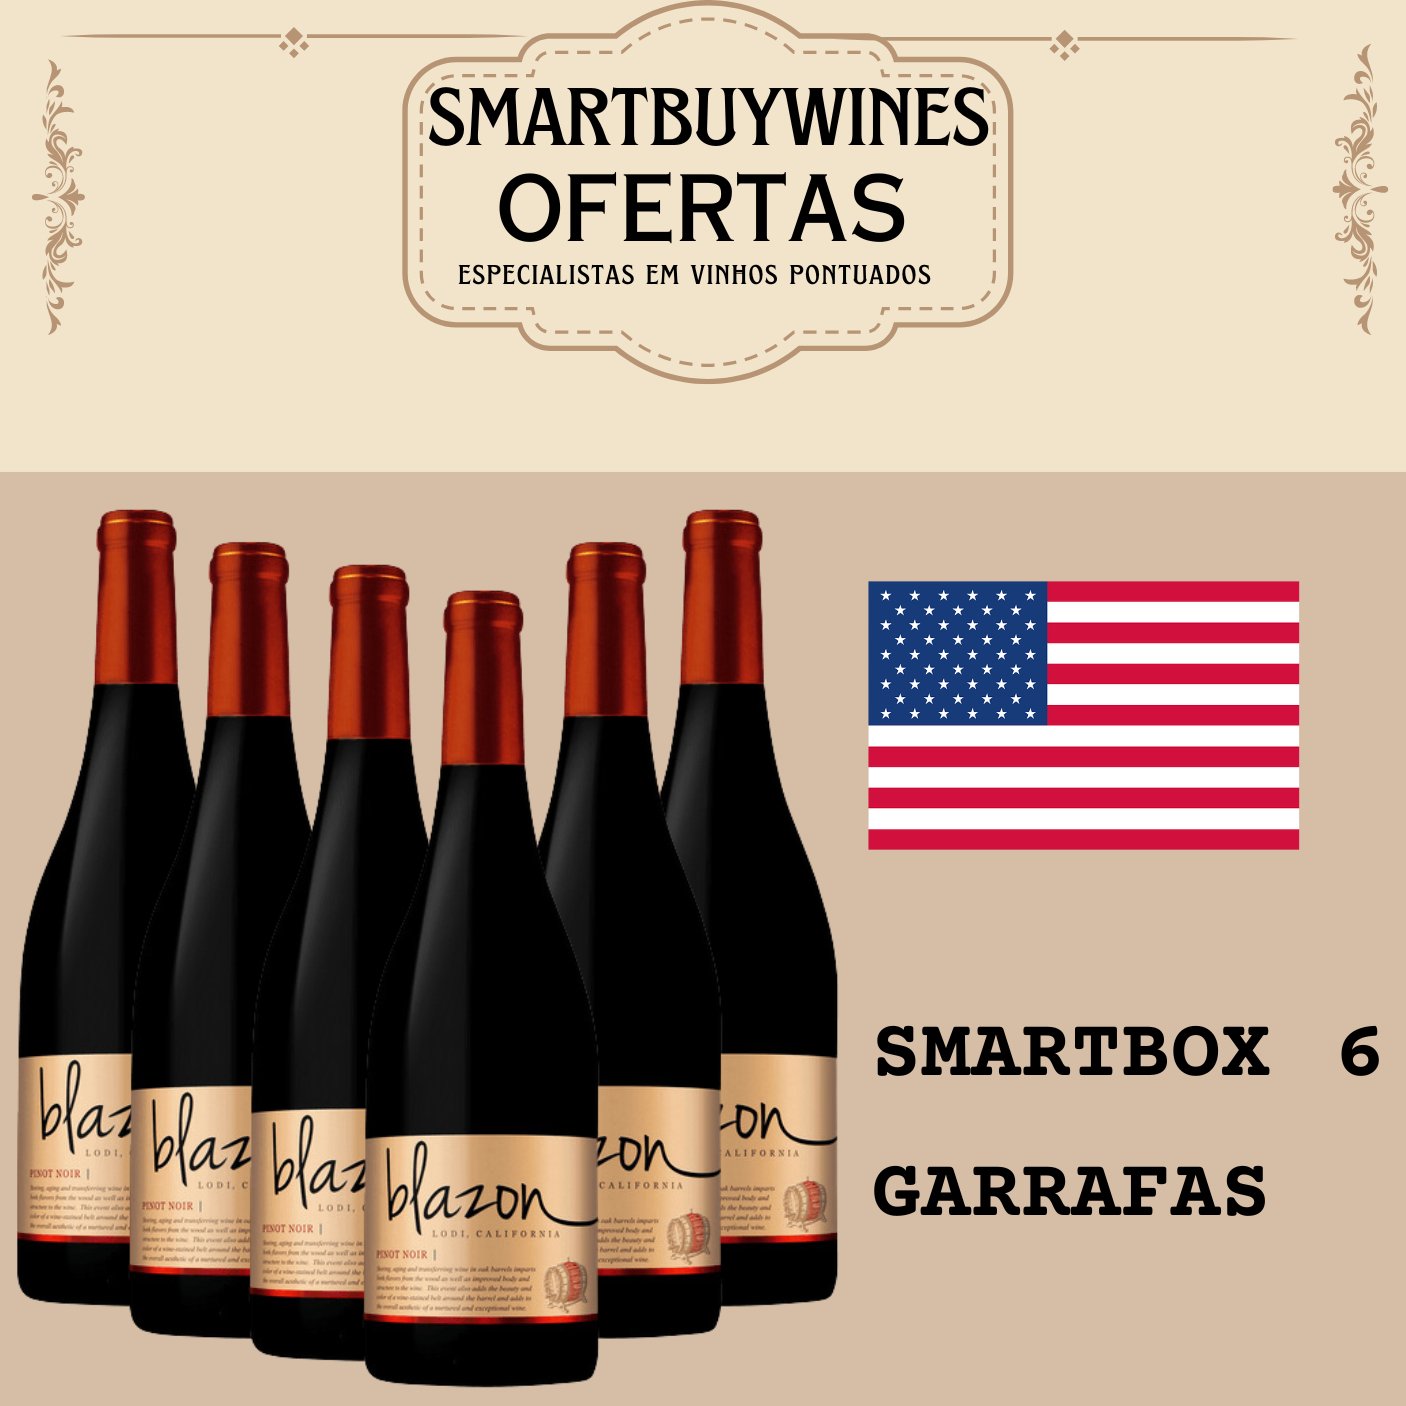 SMARTBOX 6 garrafas - Blazon Pinot Noir, Lodi, California 2018 - SmartBuyWines.com.br